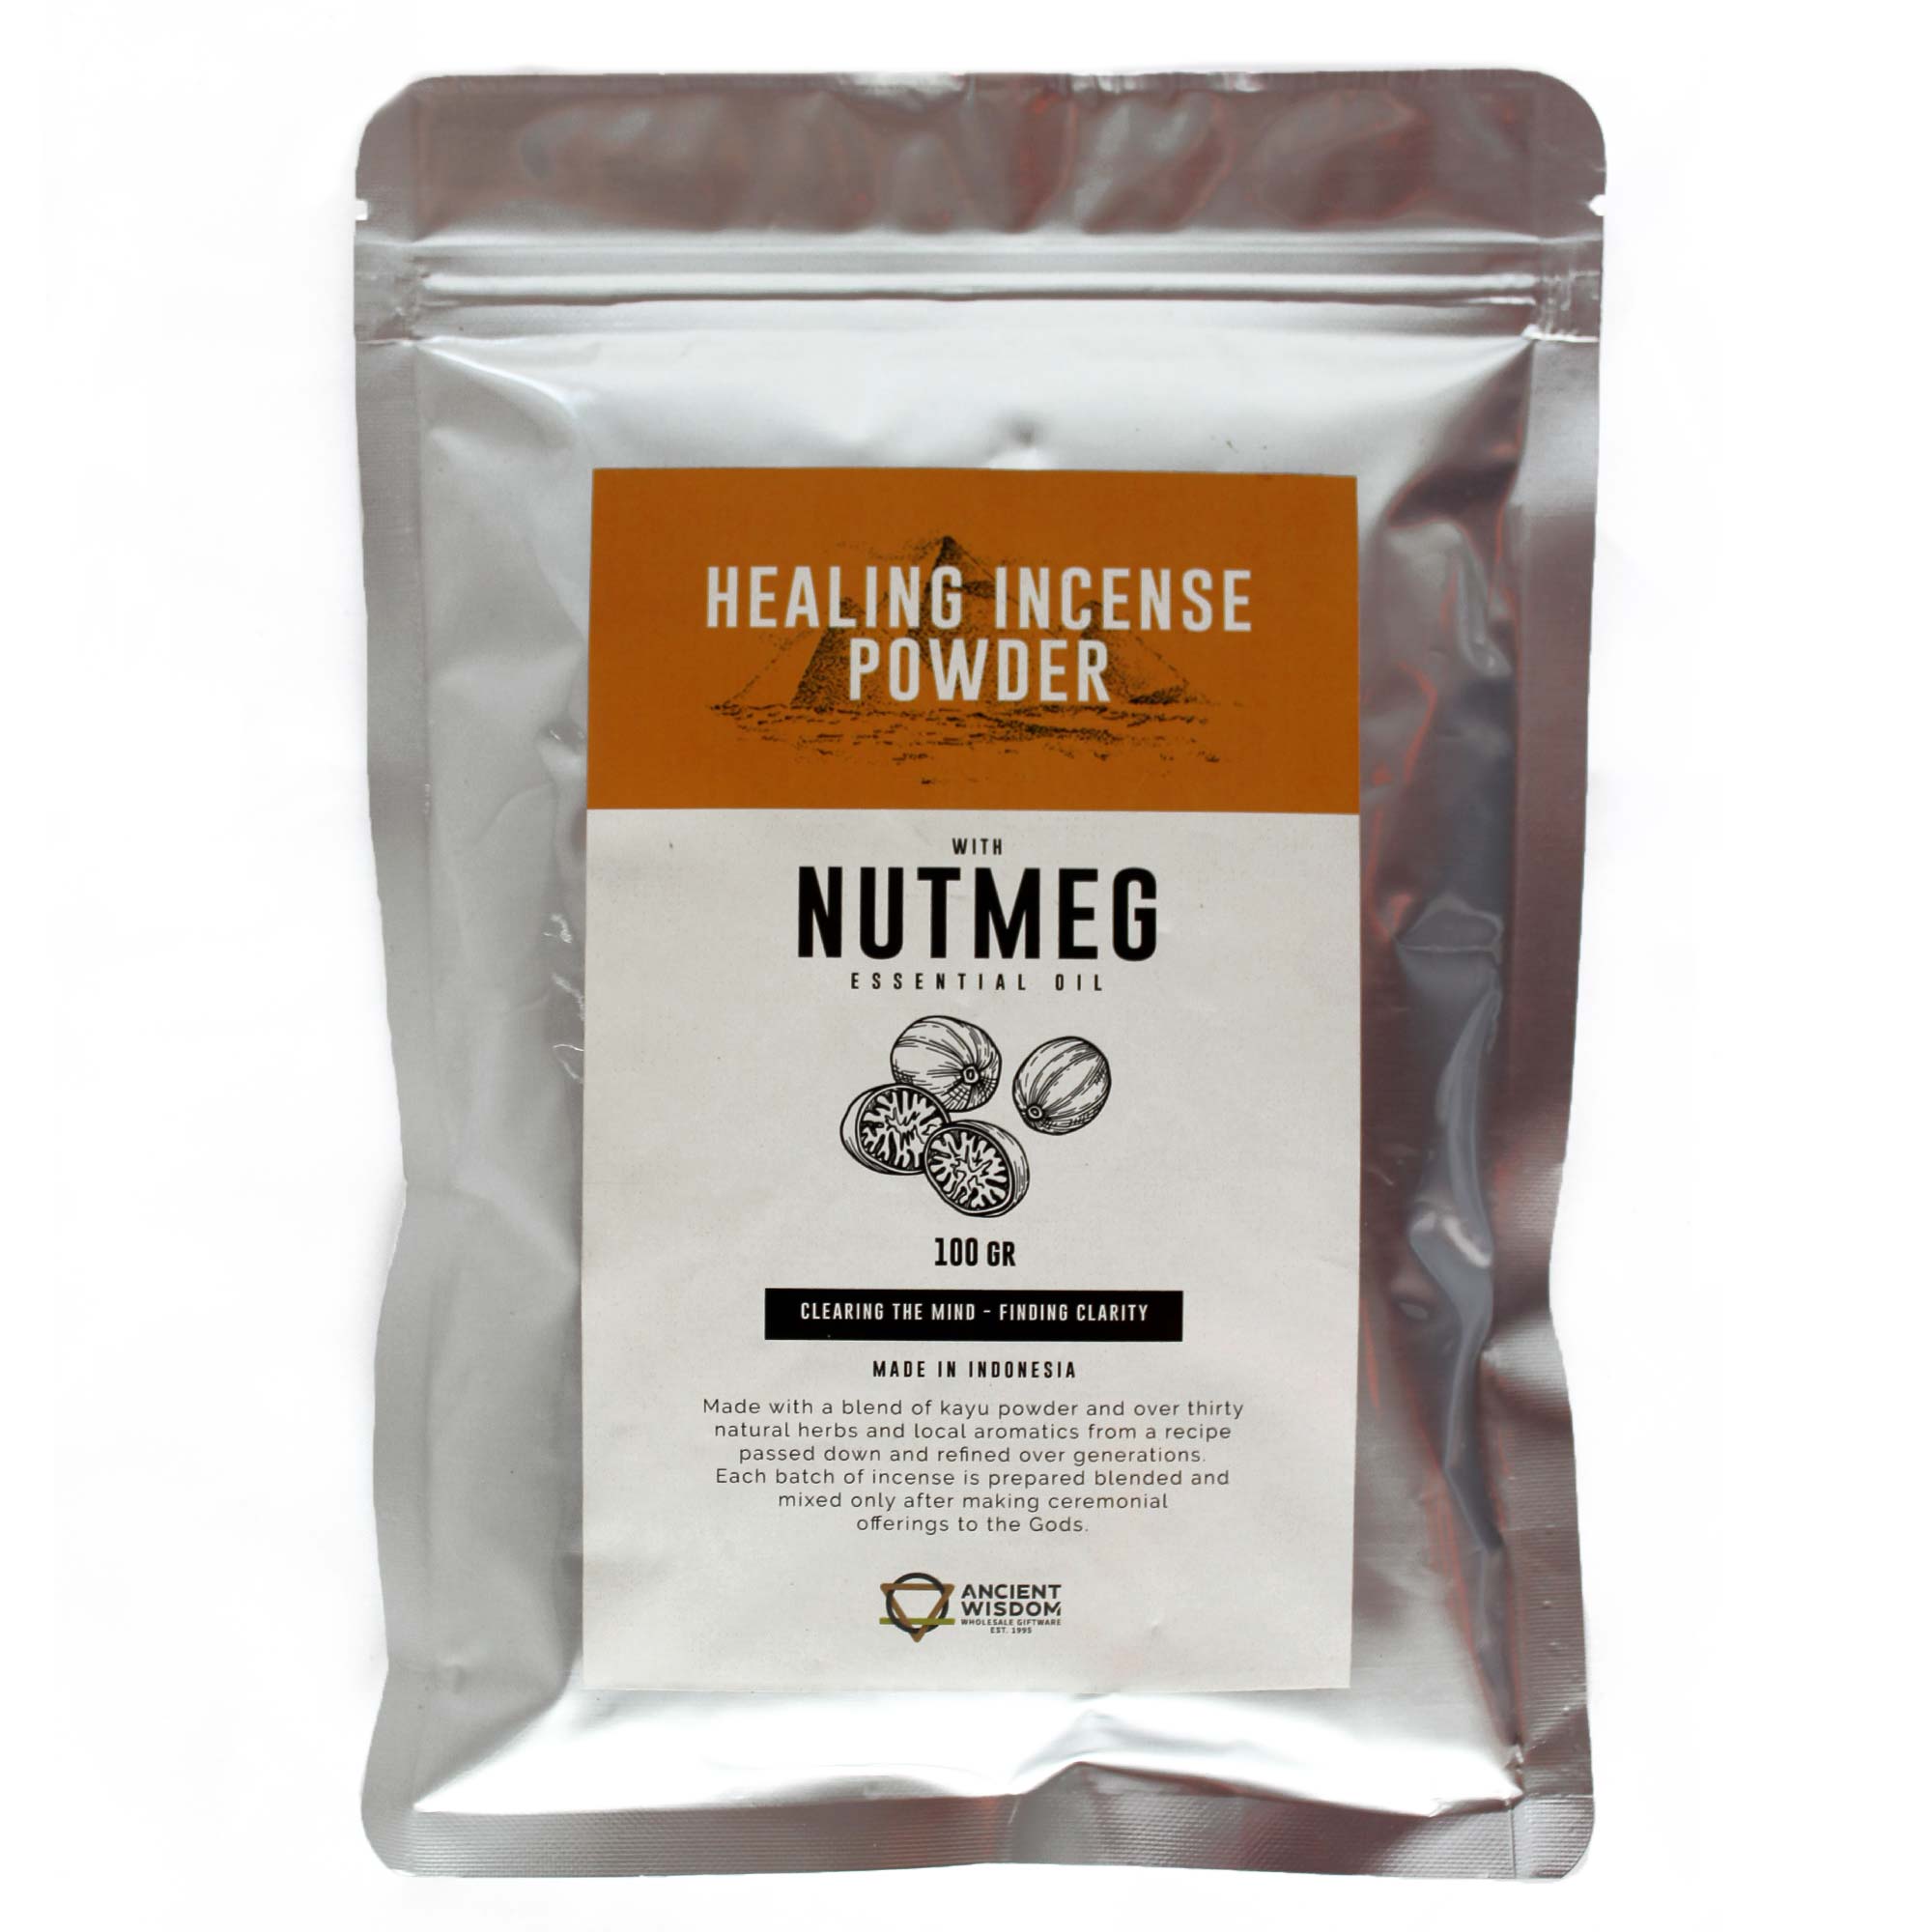 View Healing Incense Powder Nutmeg 100gm information